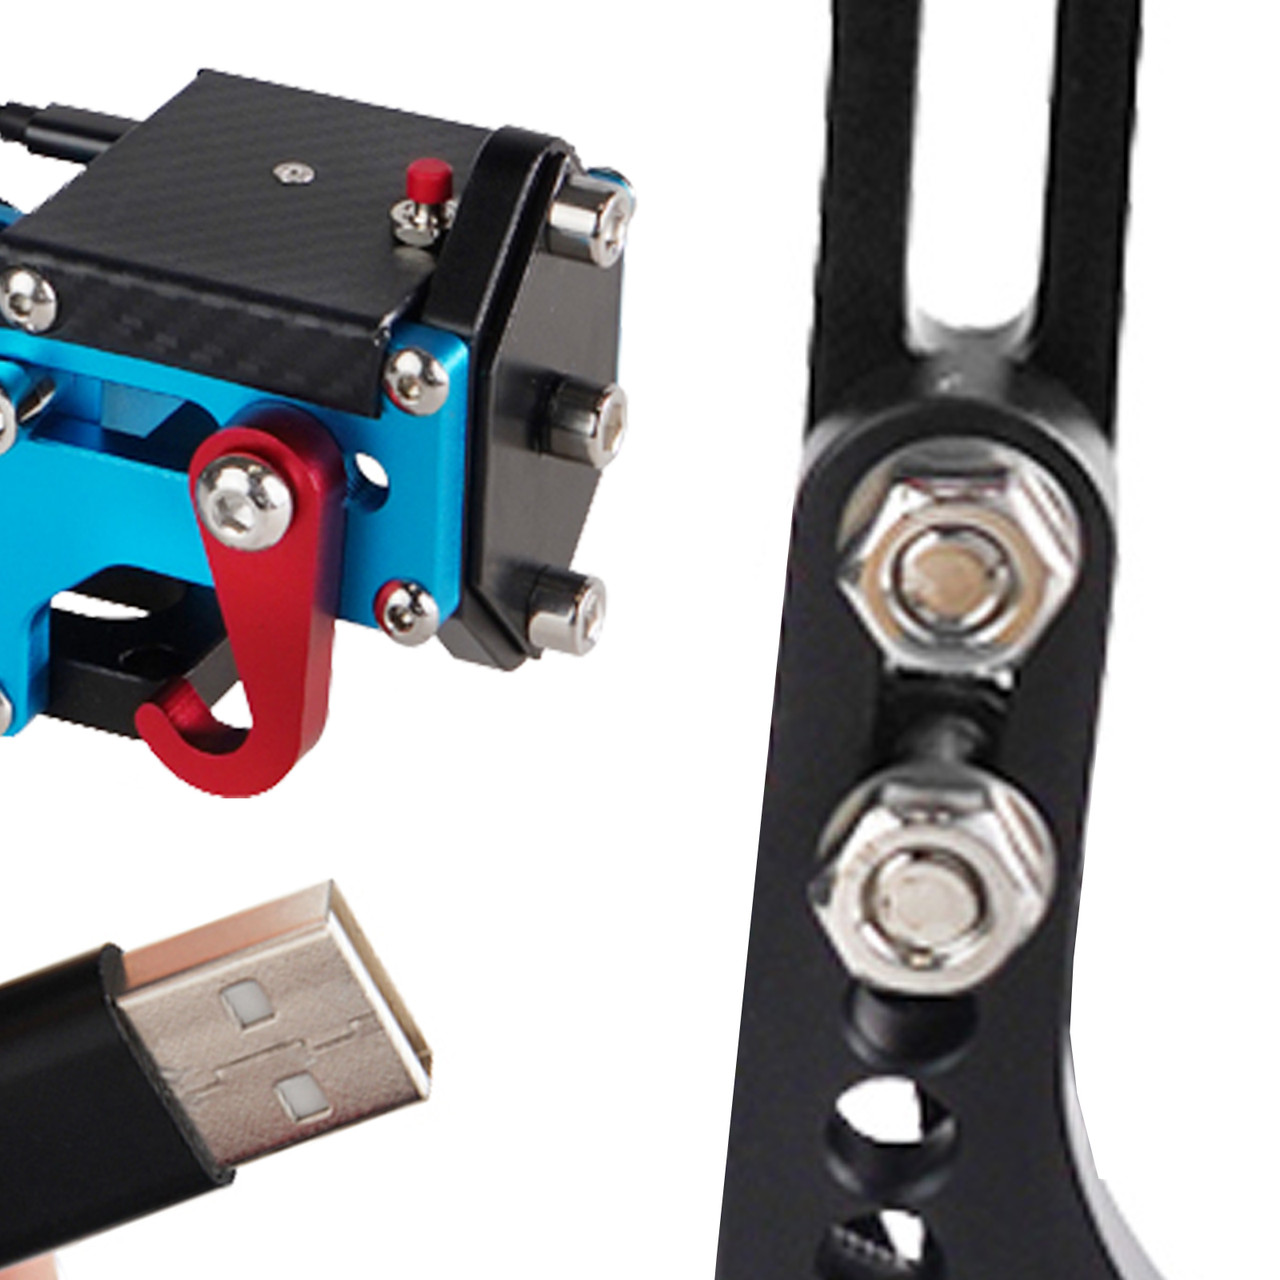 14Bit X1 XBOX USB Handbrake Kits for Racing Games Steering Wheel Stand G920 Blue